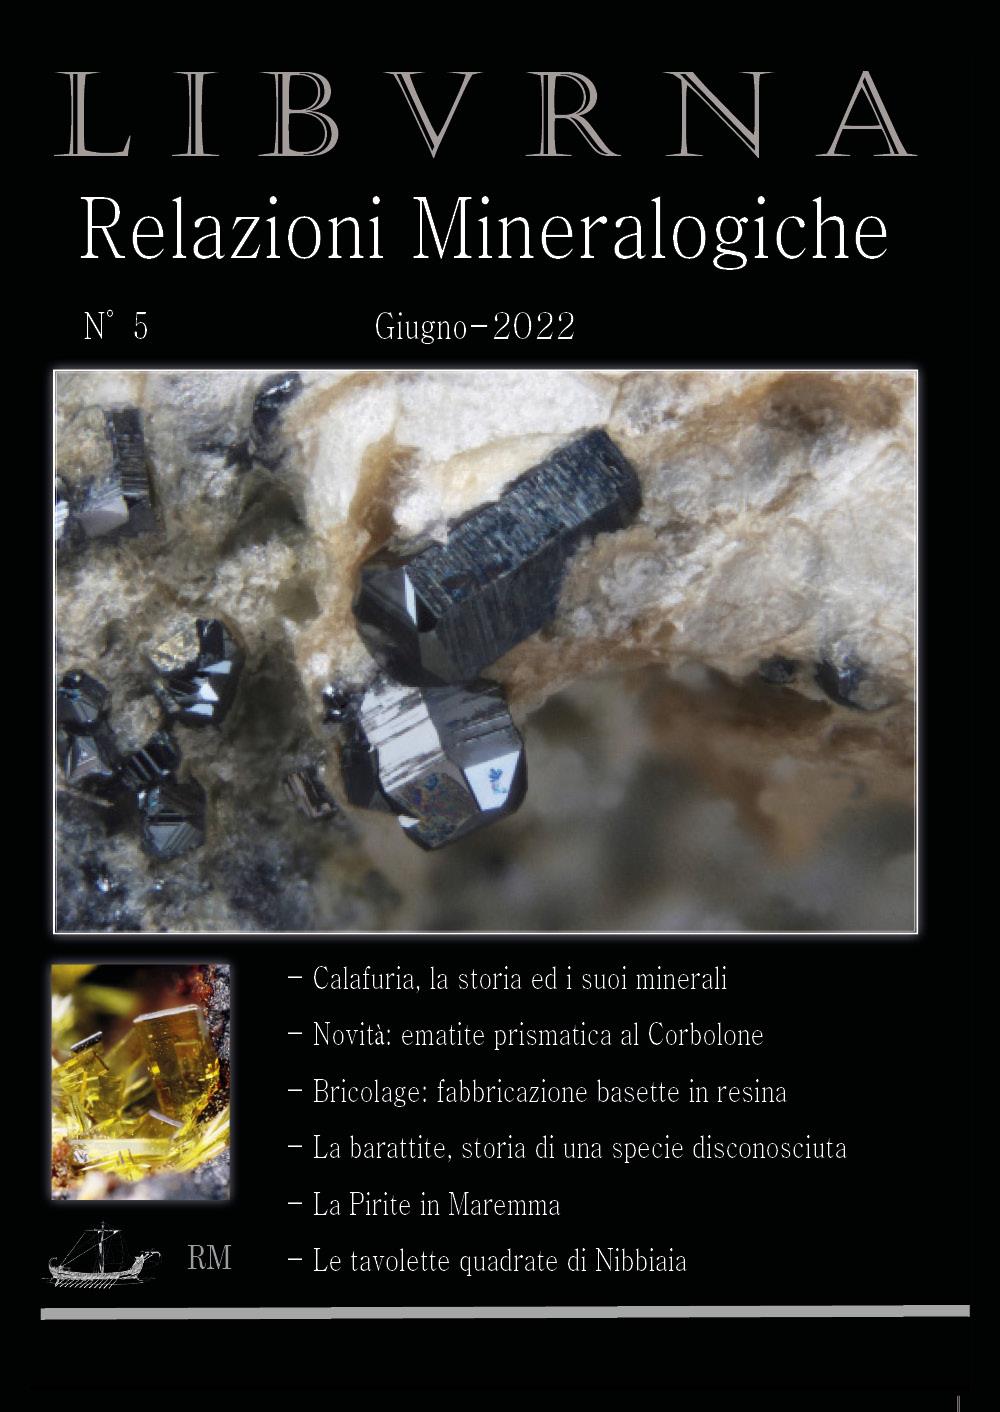 Libvrna N°5 - Relazioni mineralogiche